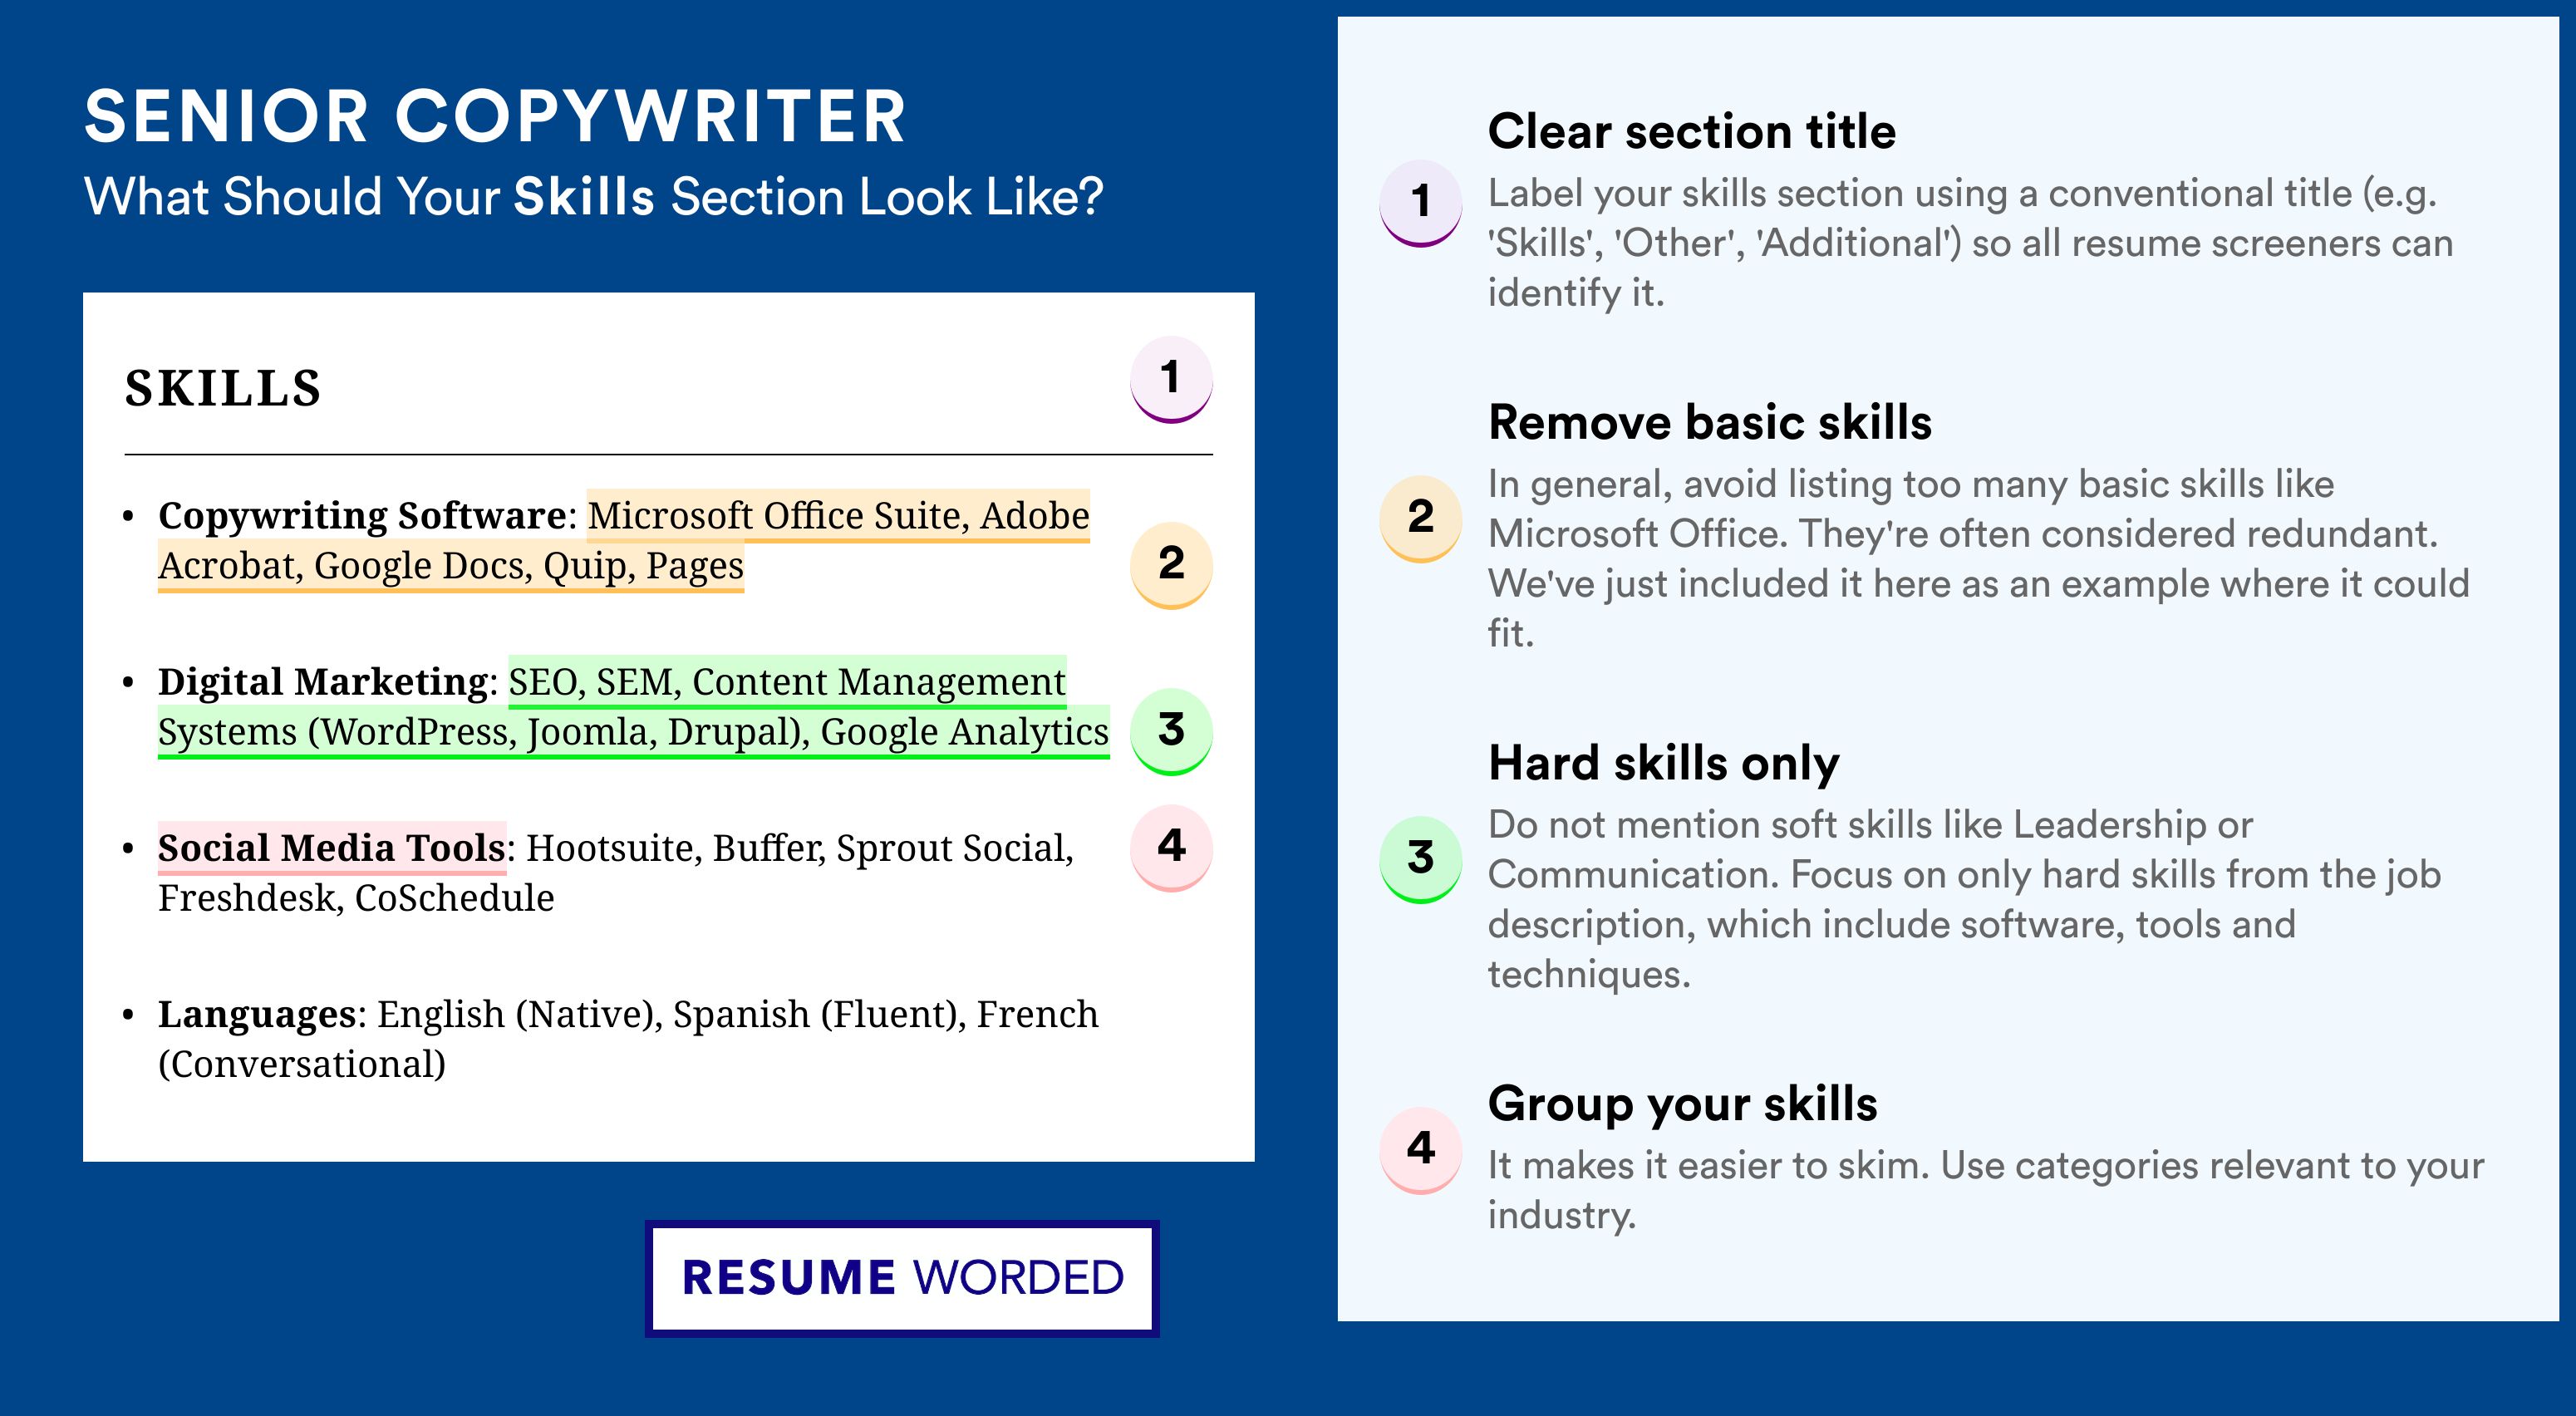 How To Write Your Skills Section - Senior Copywriter Roles